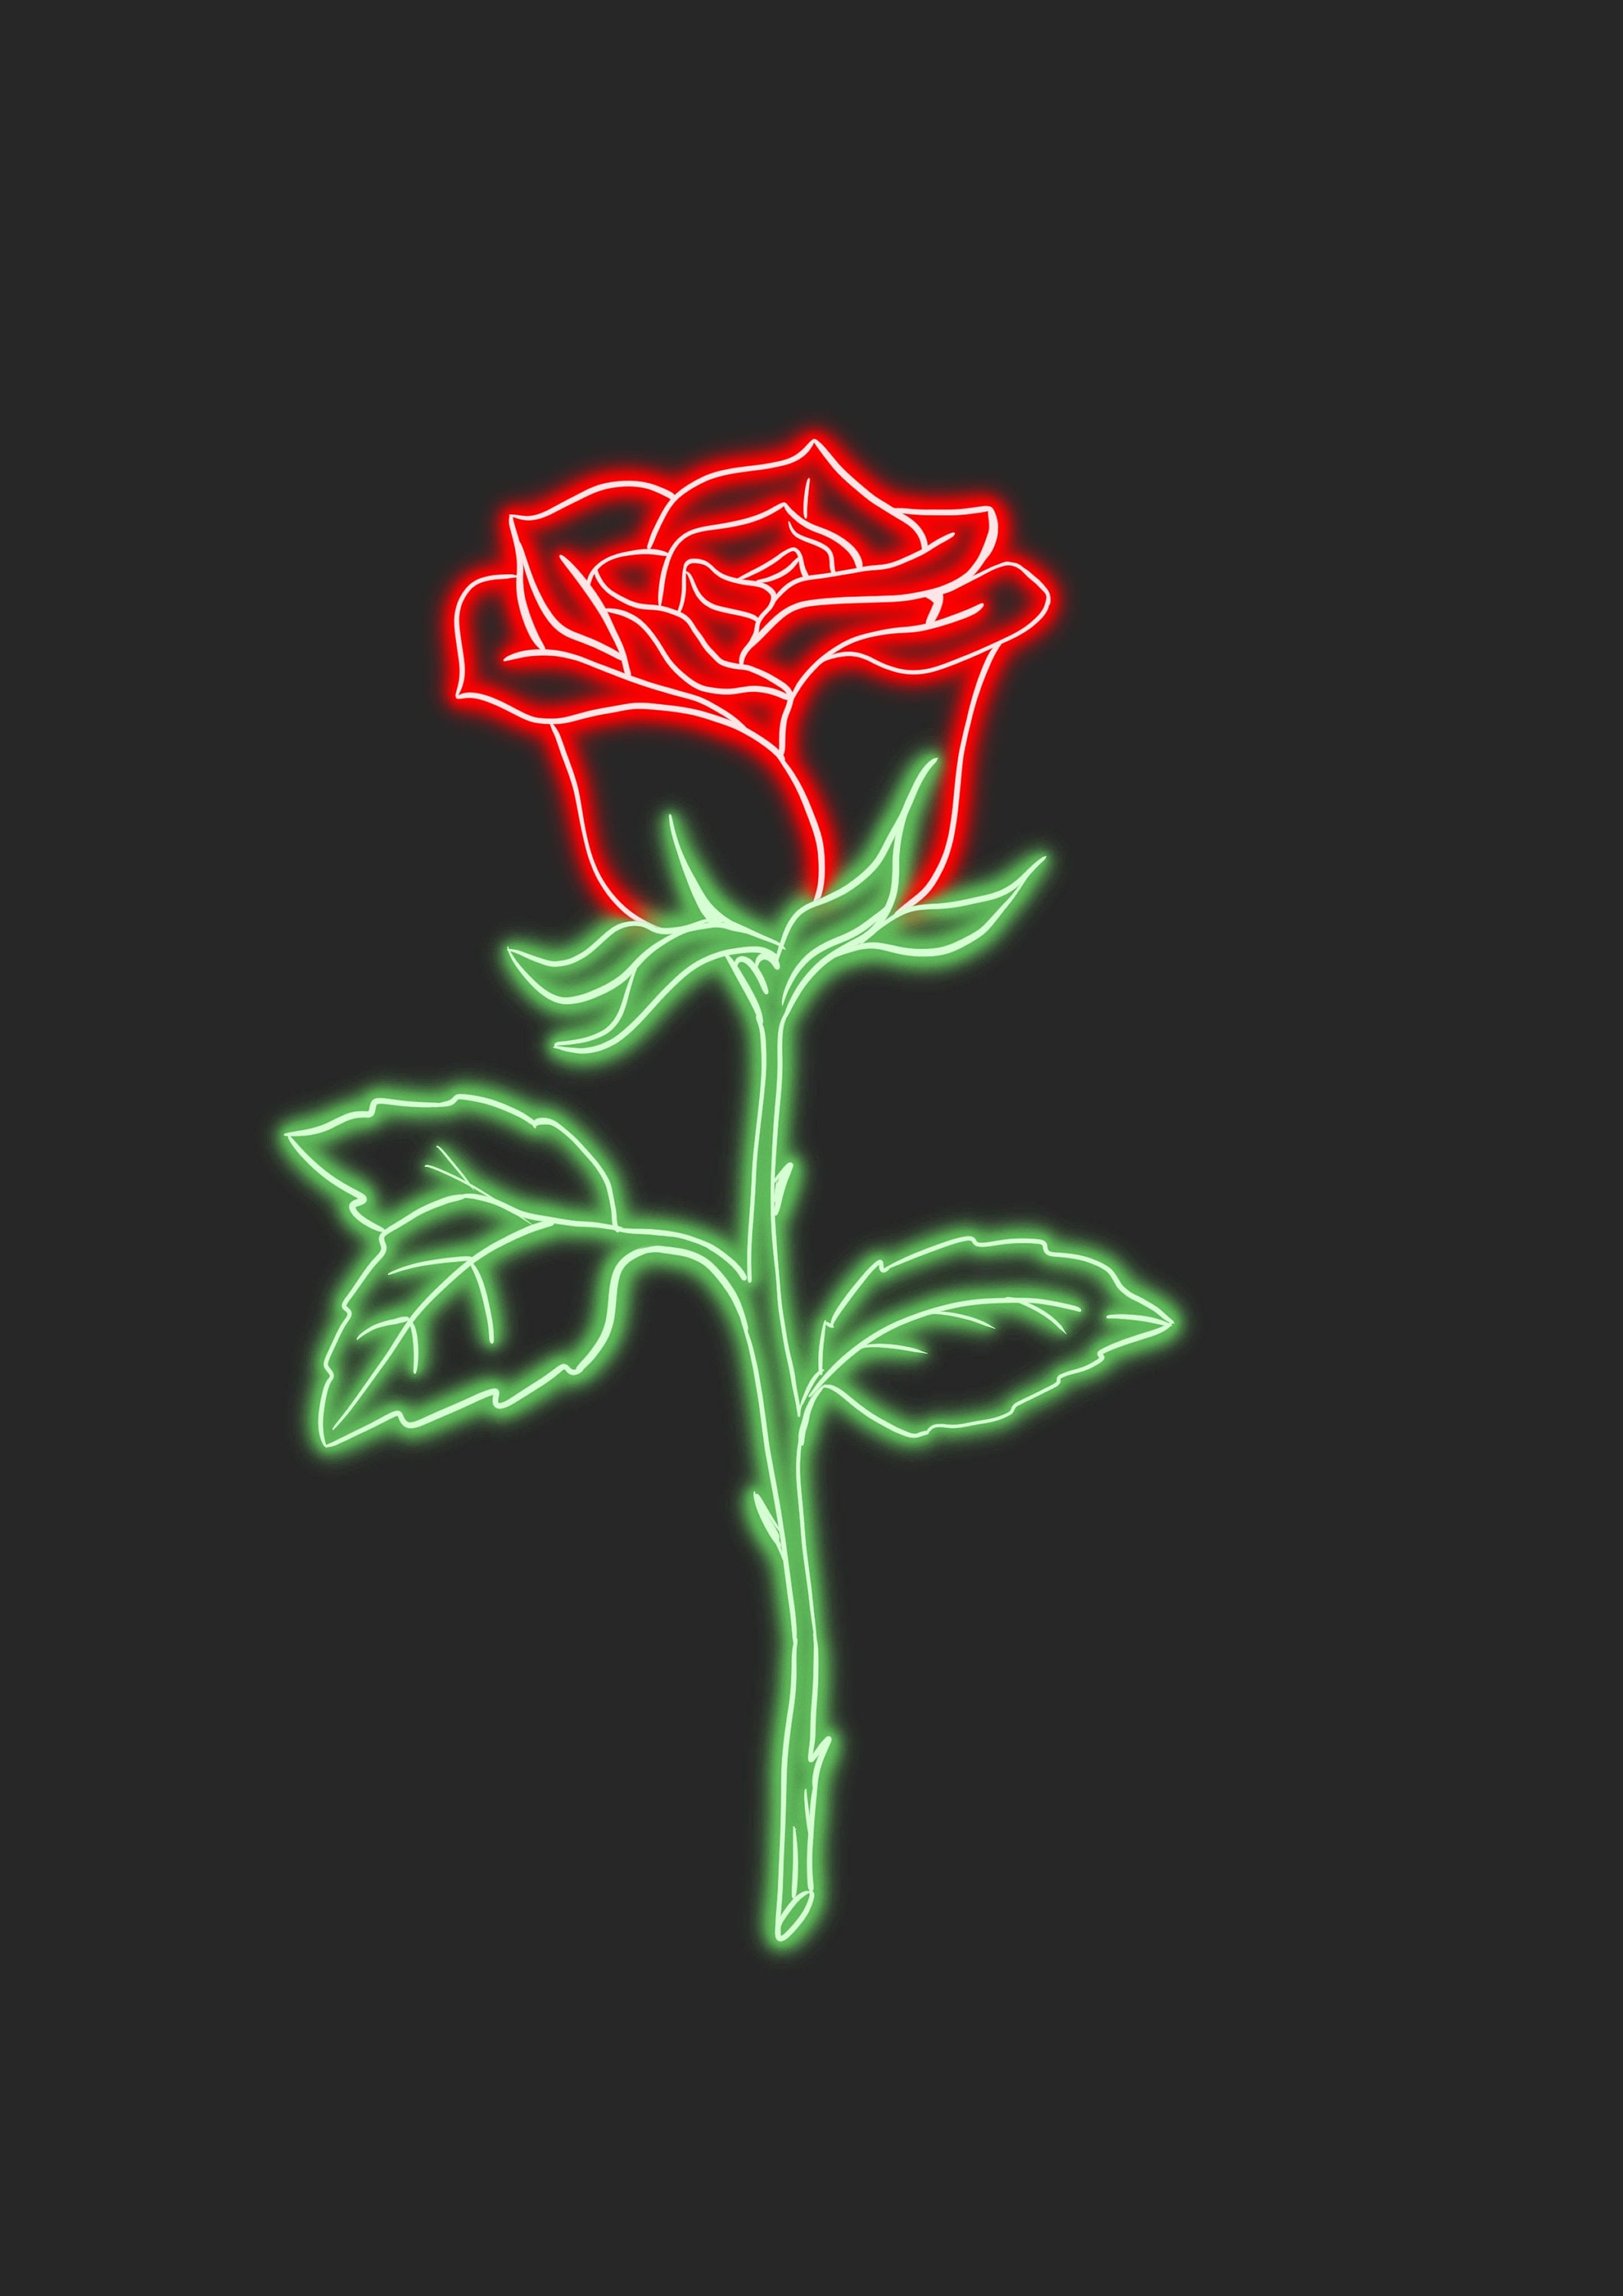 Neon Rose, printable